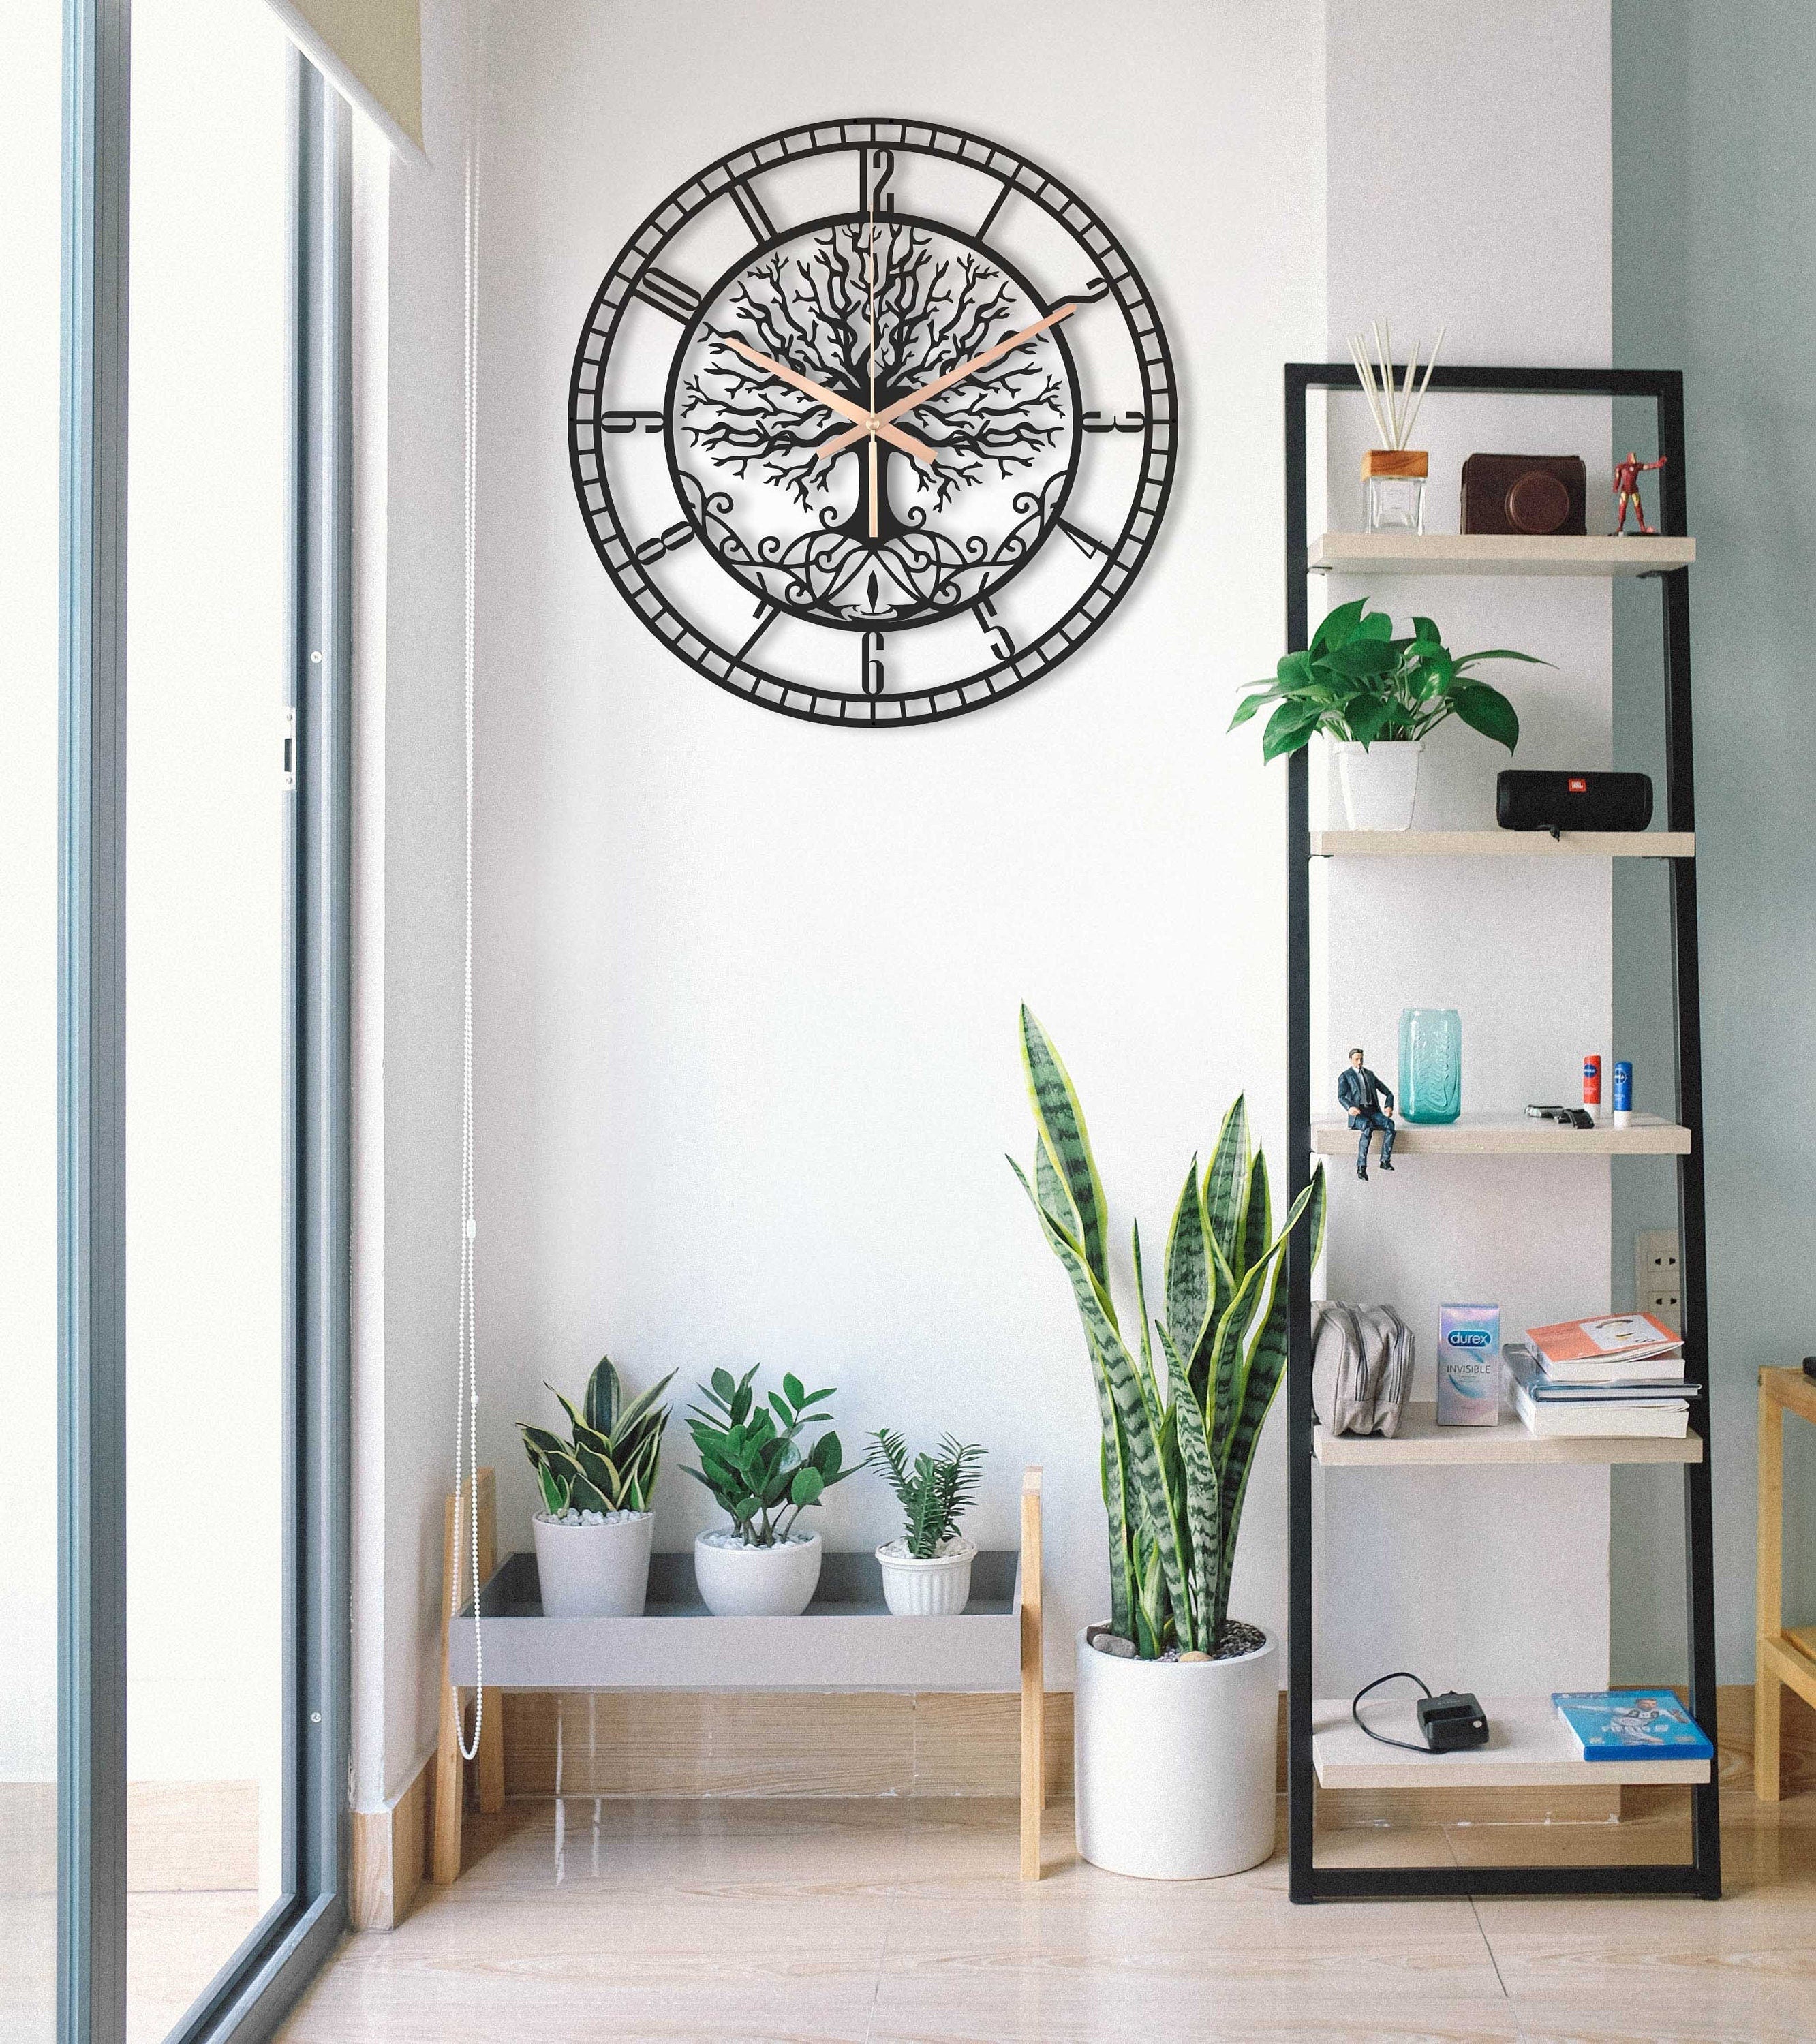 Metal Tree Of Life Clock, Oversized Wall Clock, Farmhouse Wall Clock, Unique Wall Clock, Silent Wall Clock, Big Wall Clock, Clocks For Wall